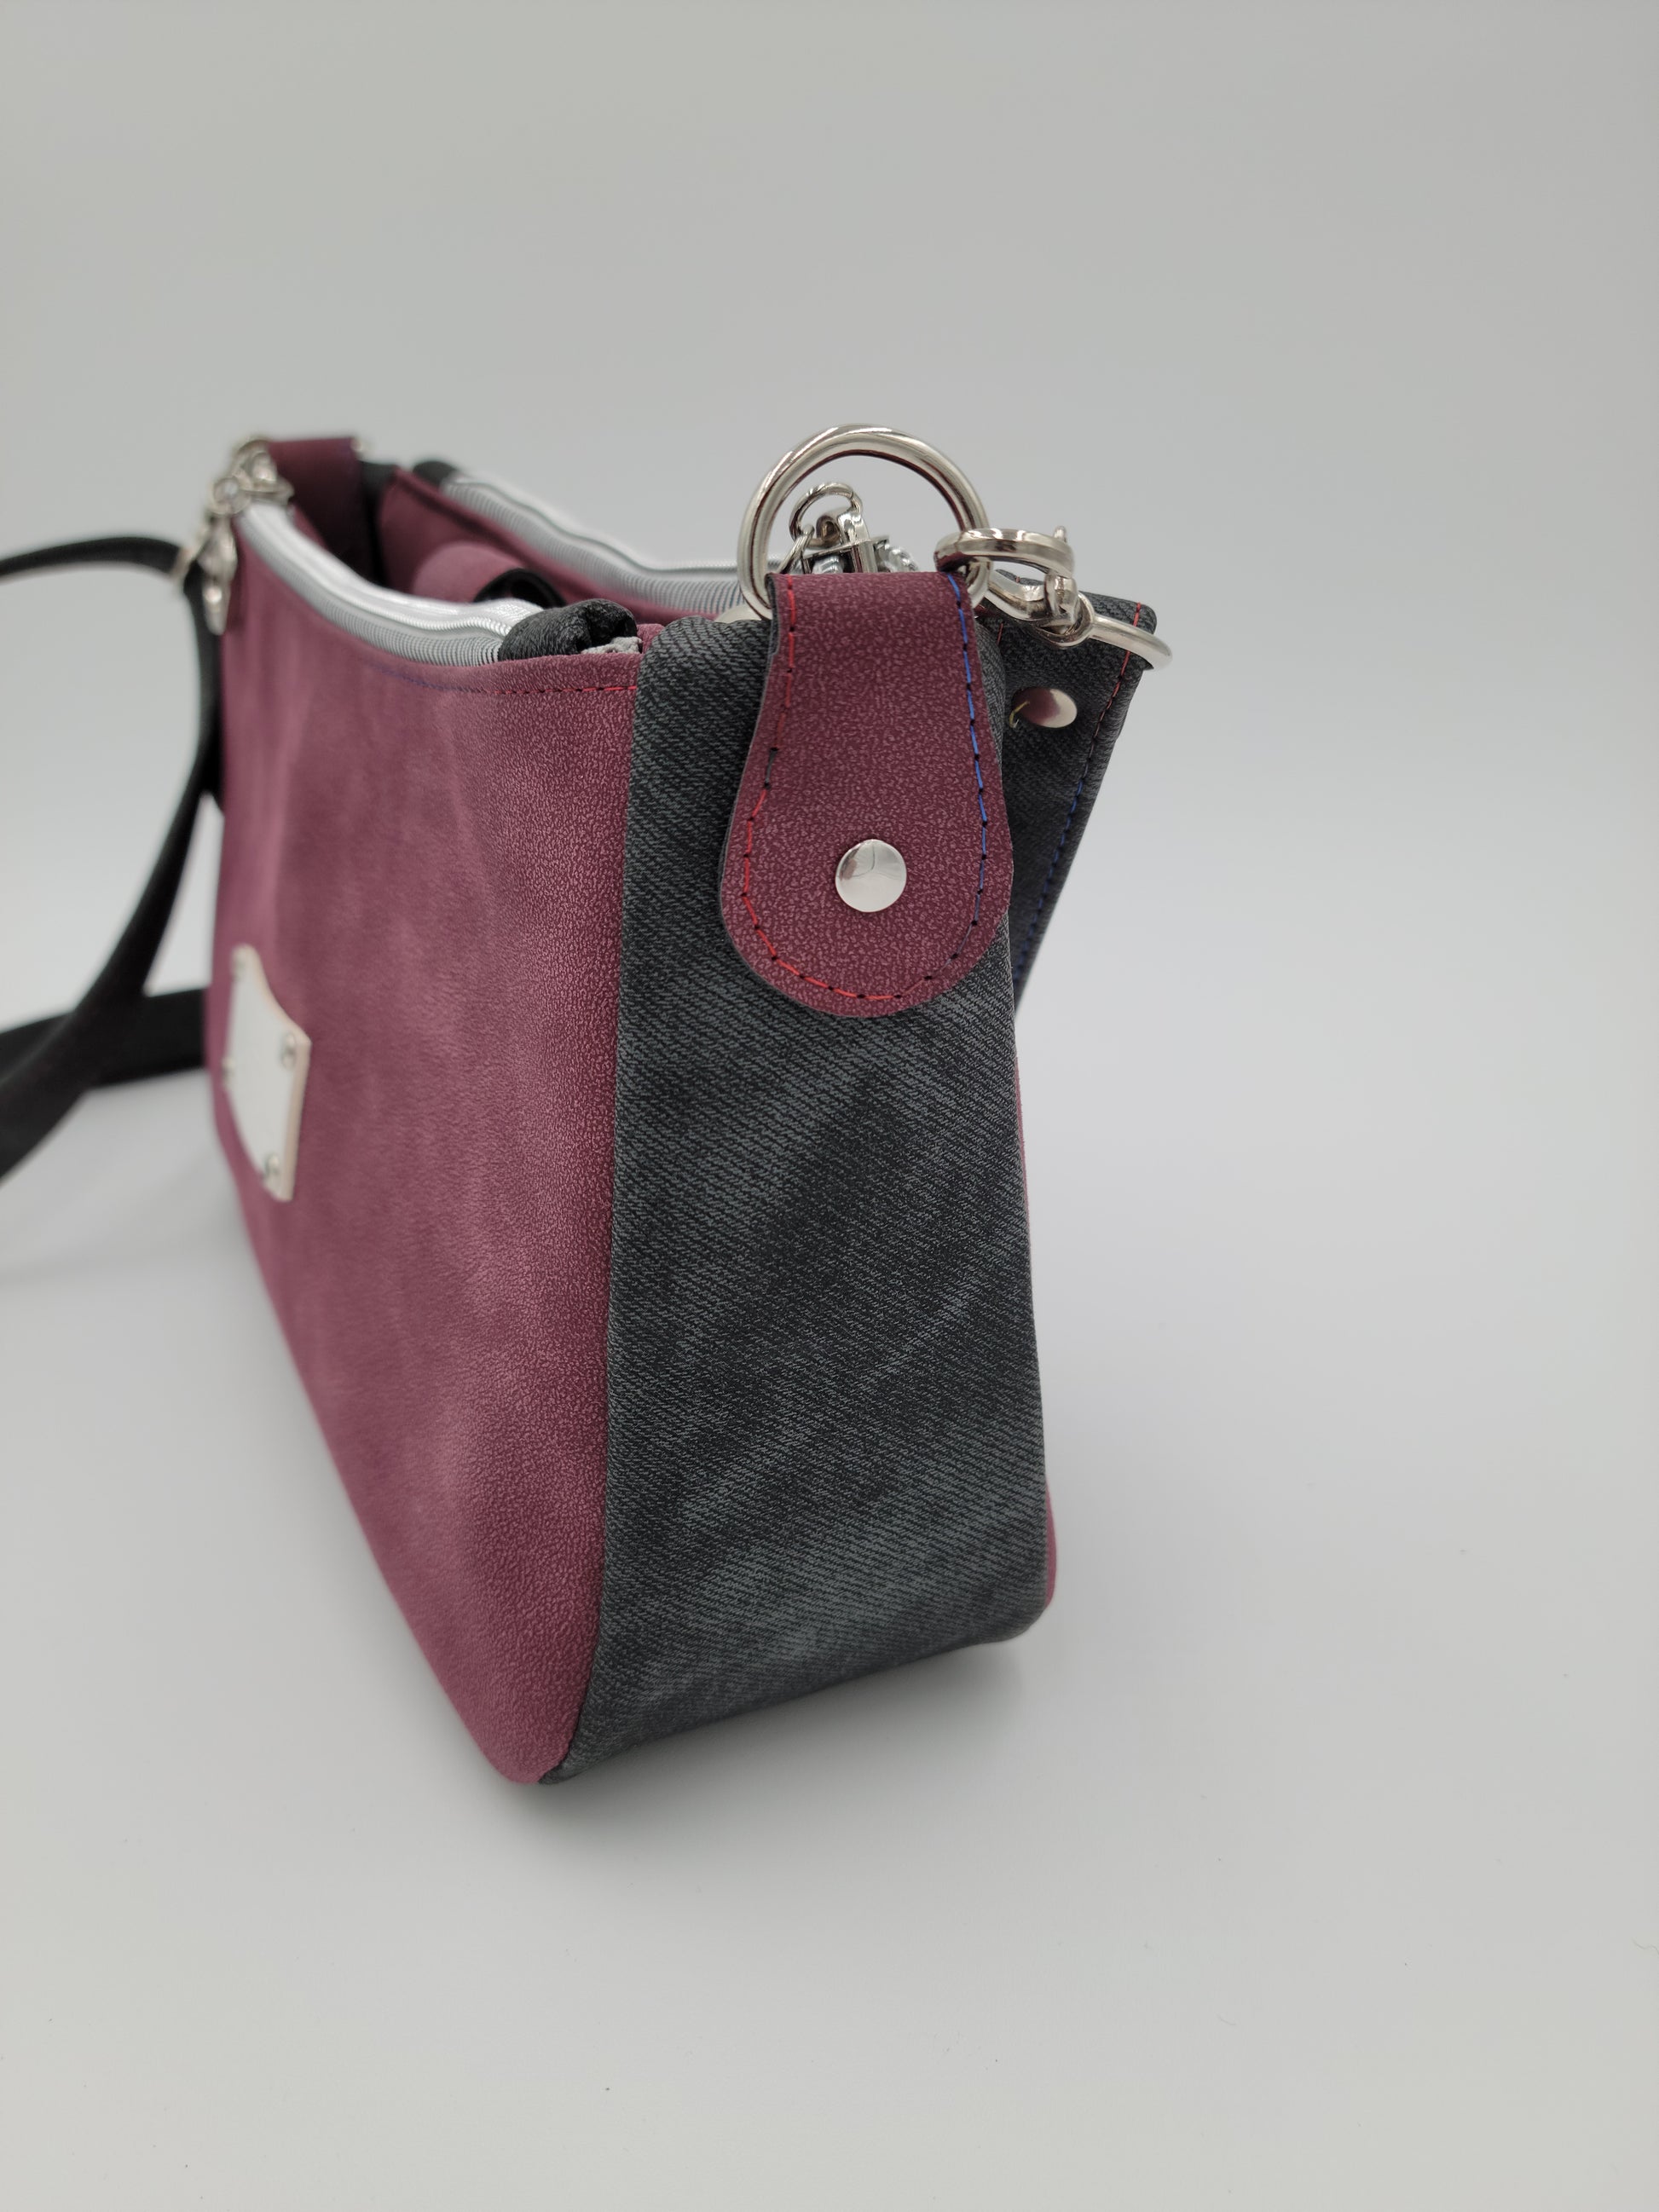 Aries 3-Way Convertible Bucket Bag